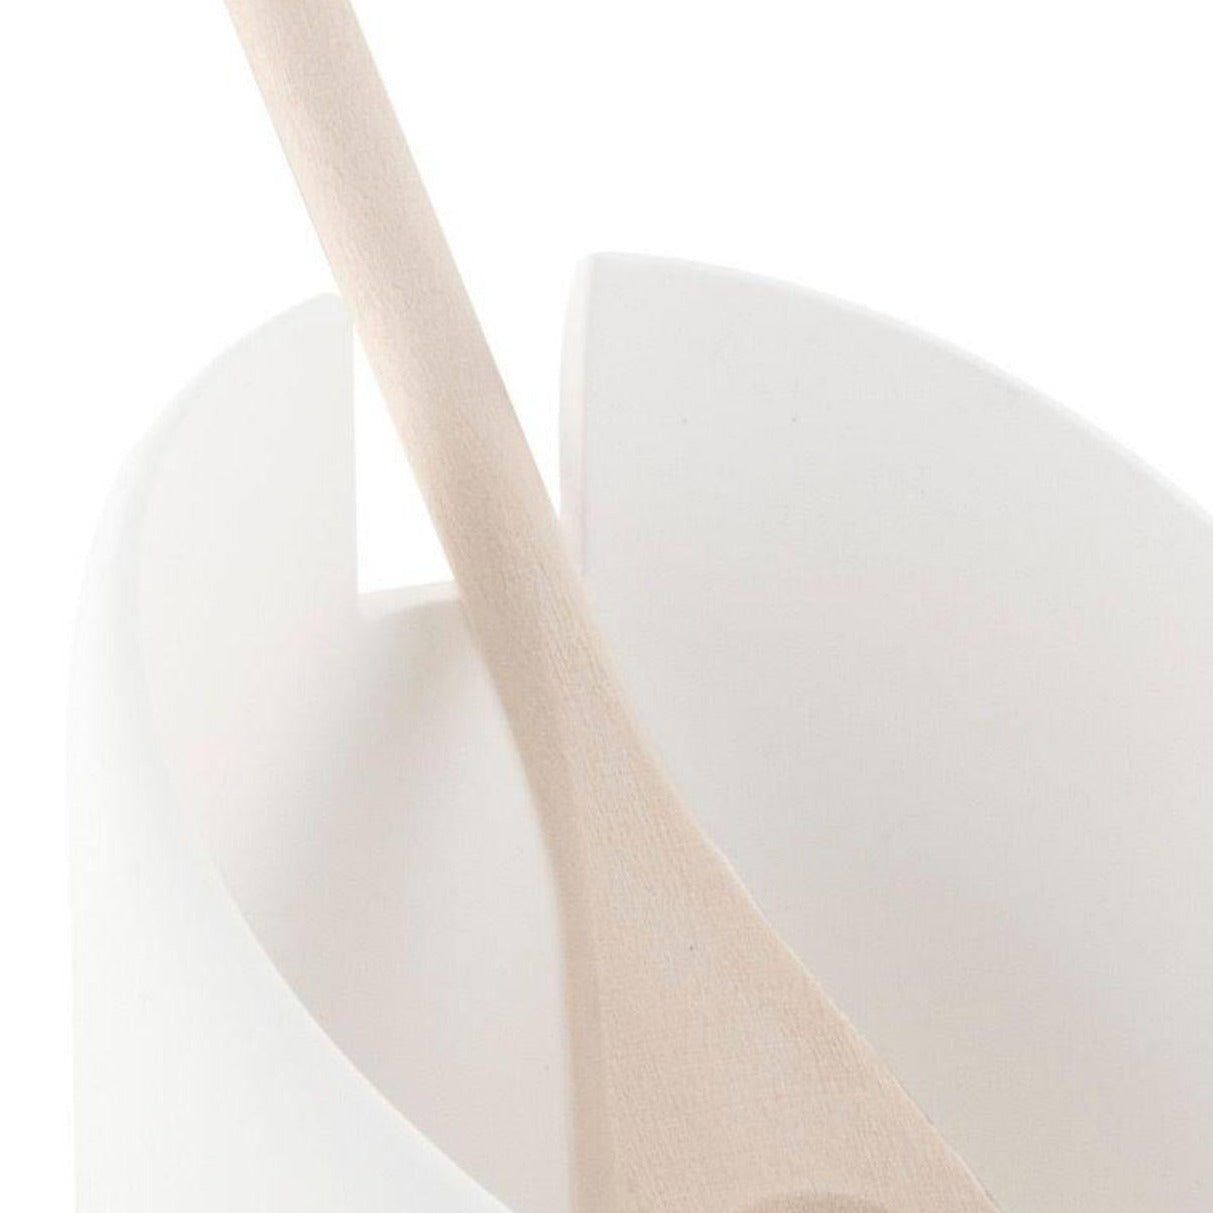 White PVC Spoon Holder